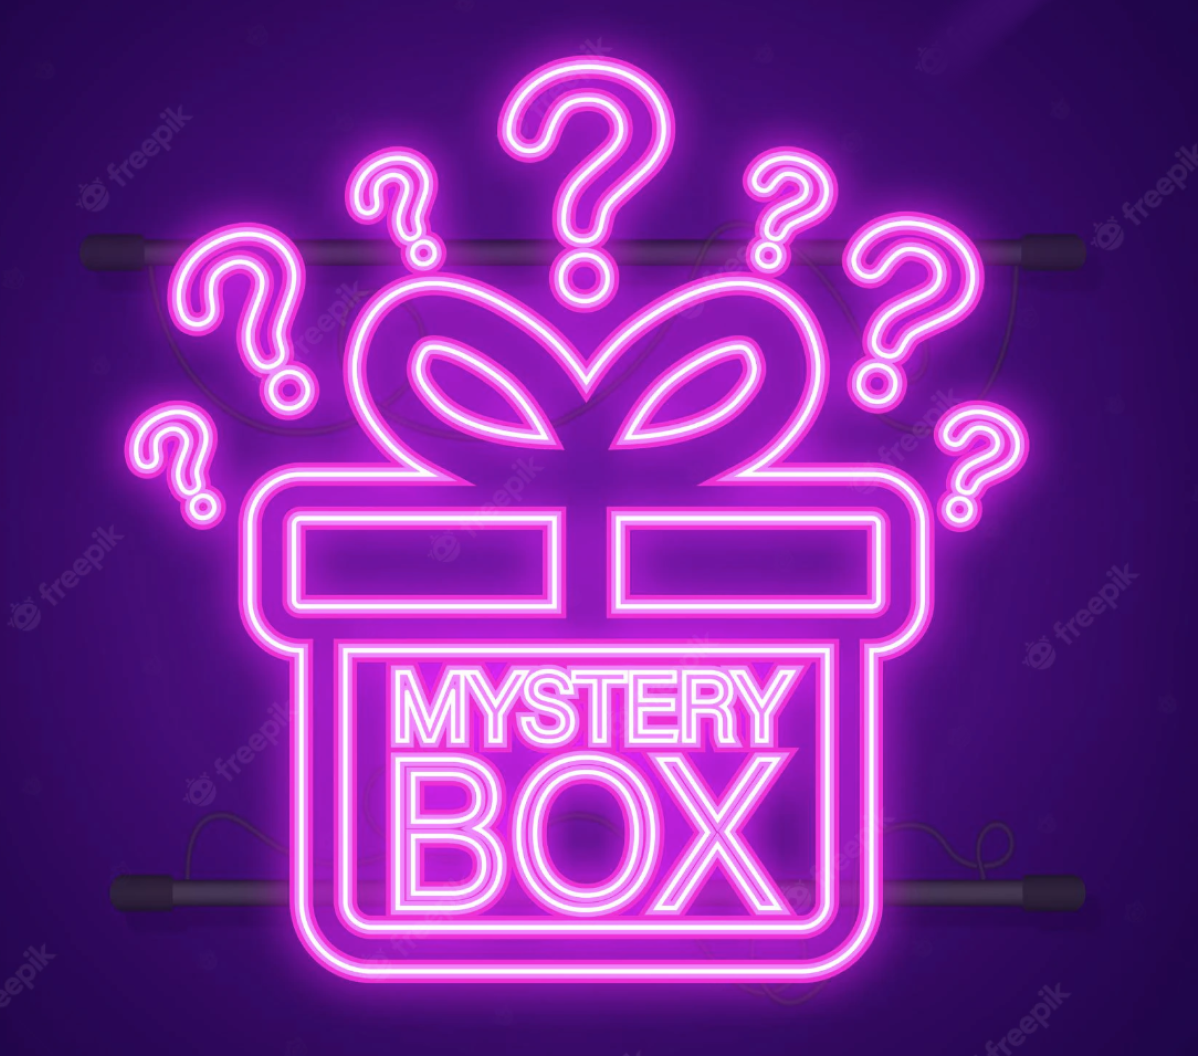 $30 Mystery Box